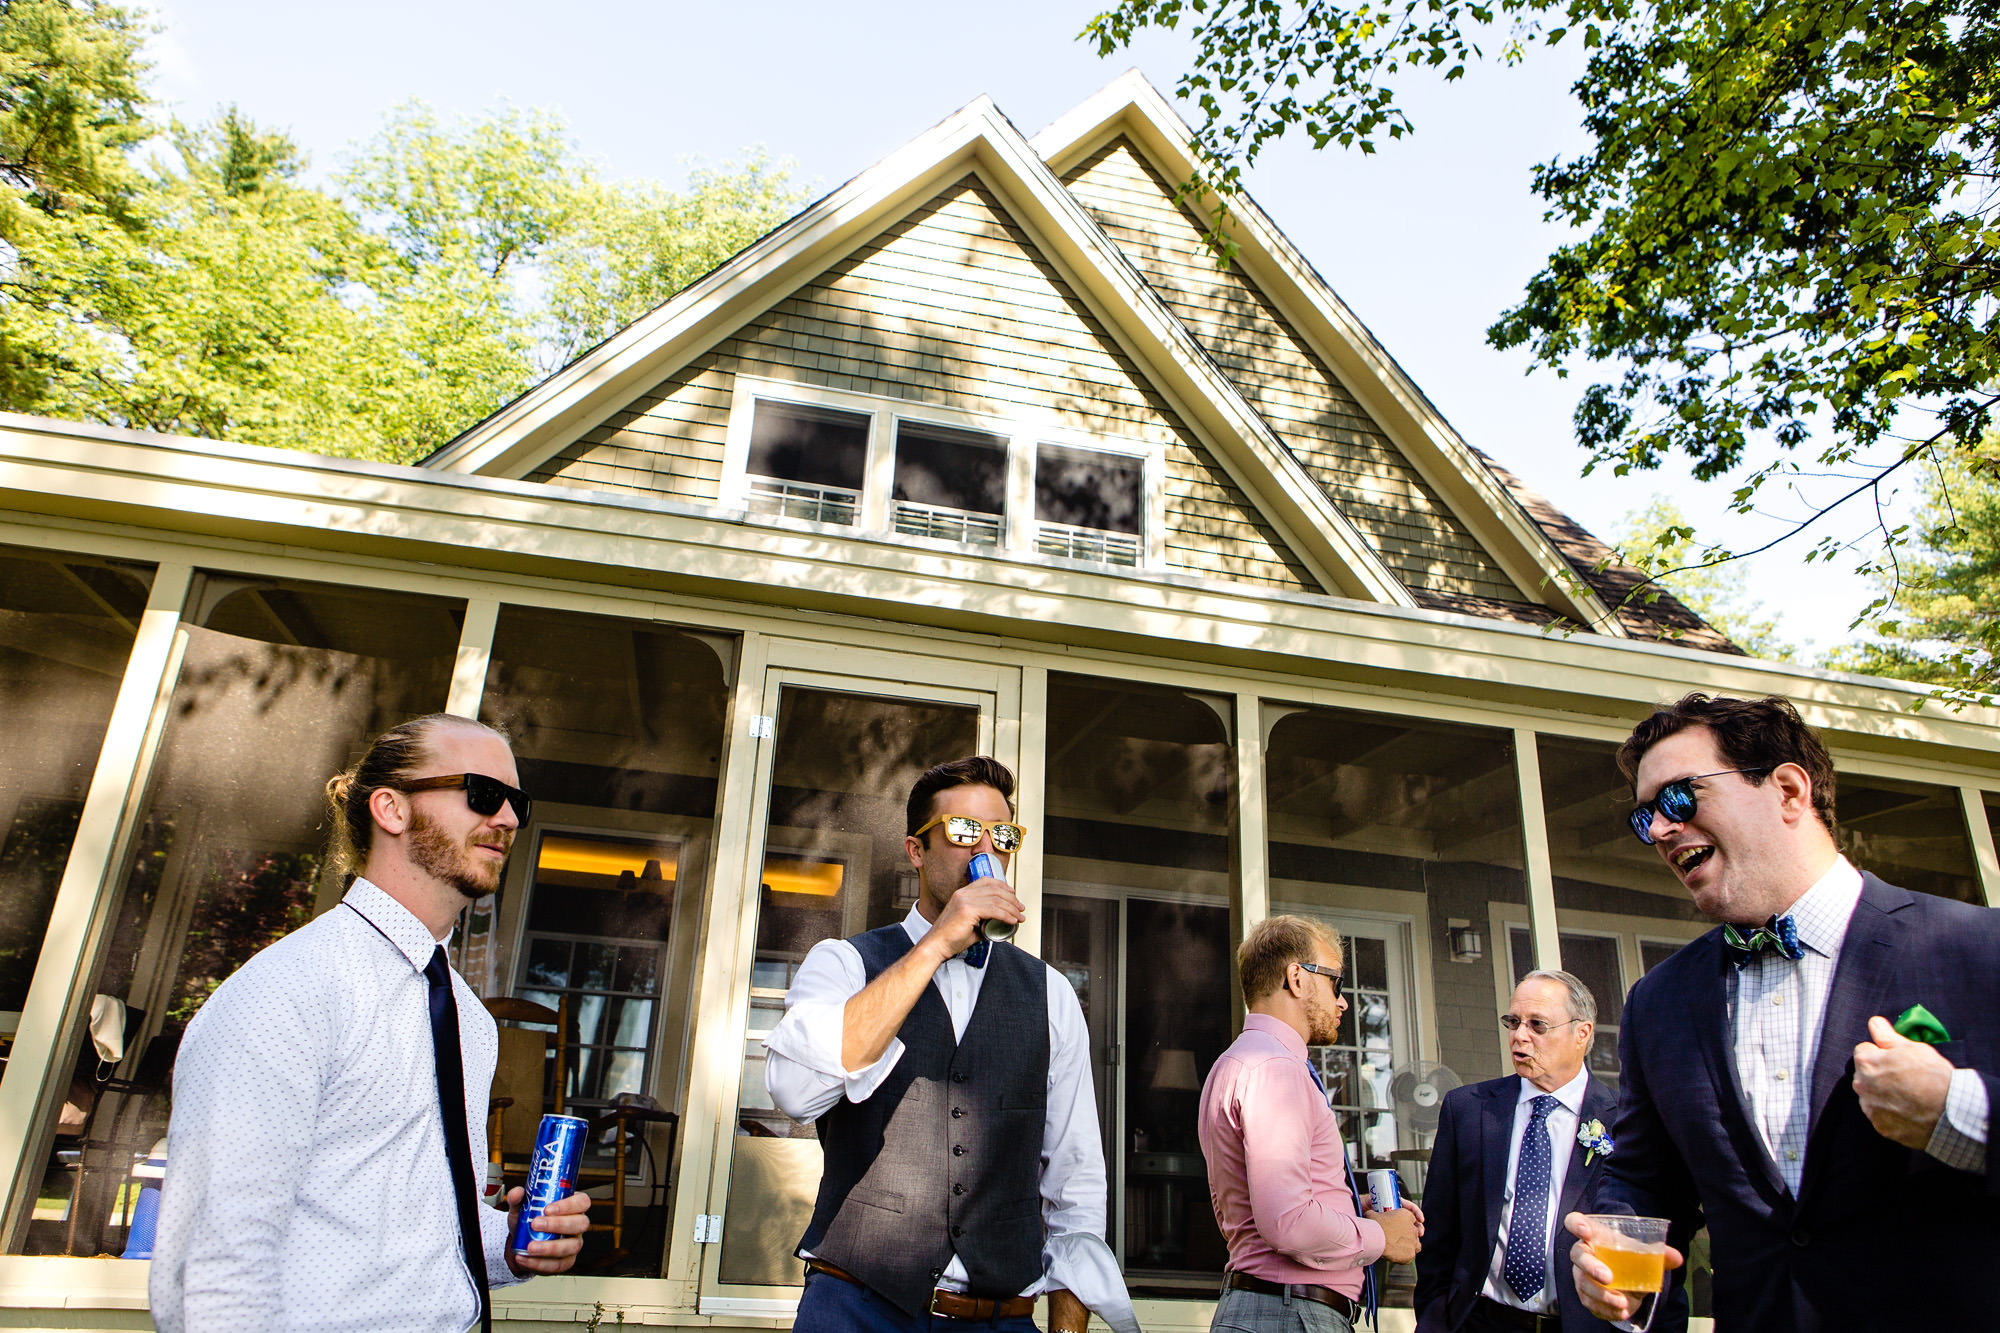 Groomsmen prepare for a lakeside wedding in Maine